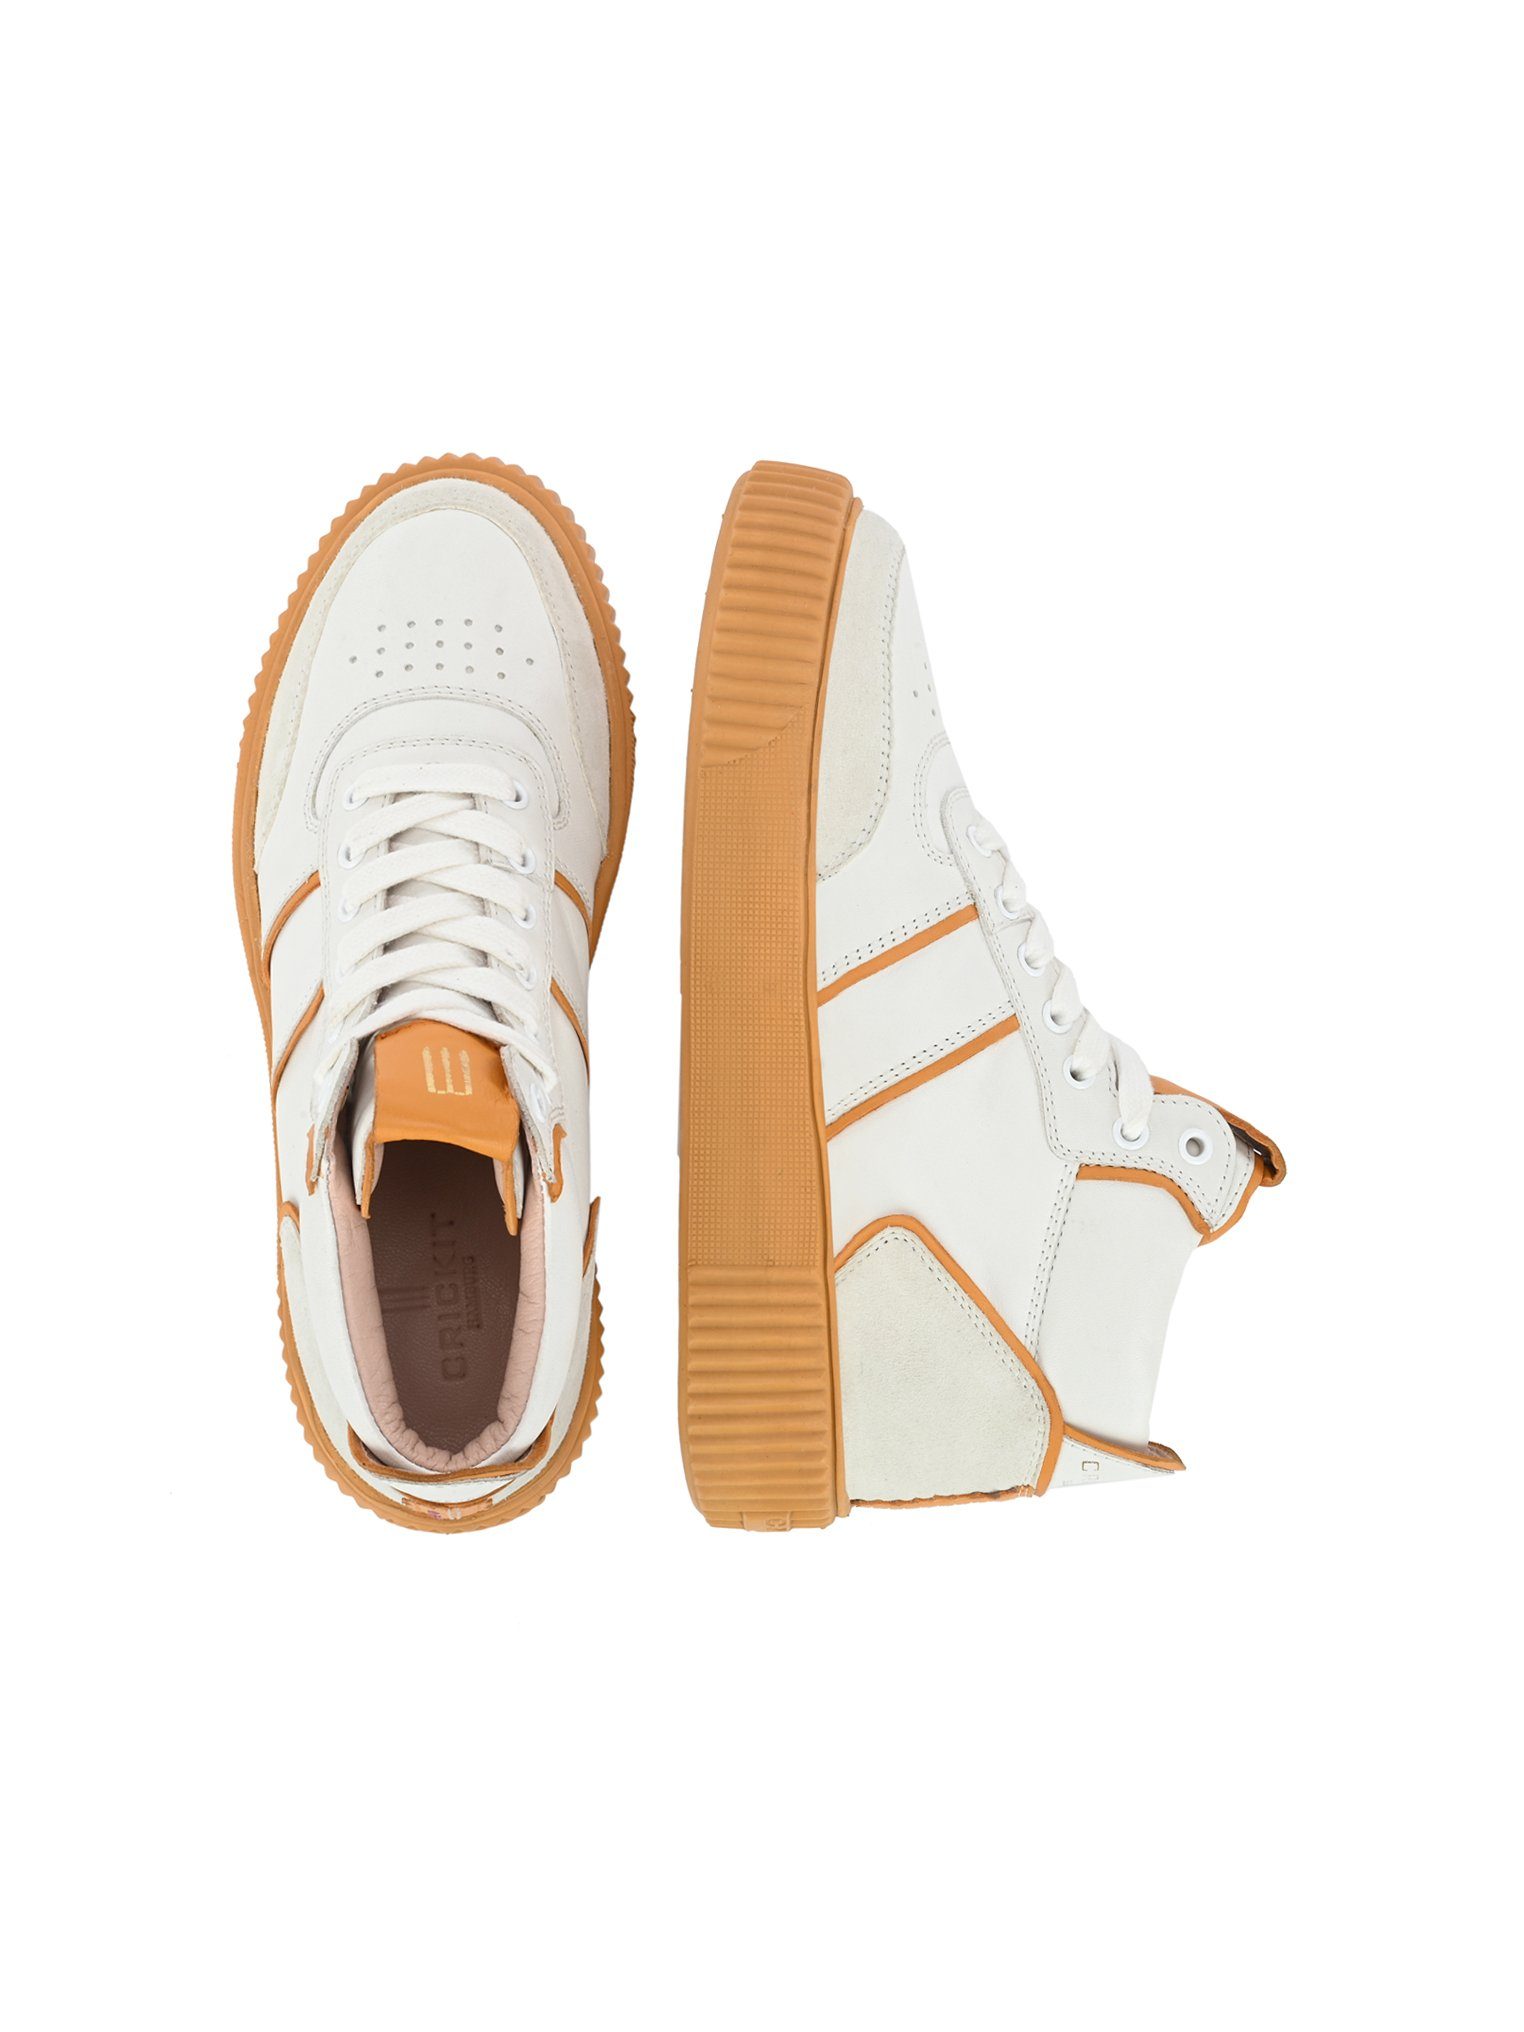 CRICKIT MARWA Sneaker Weiß orange